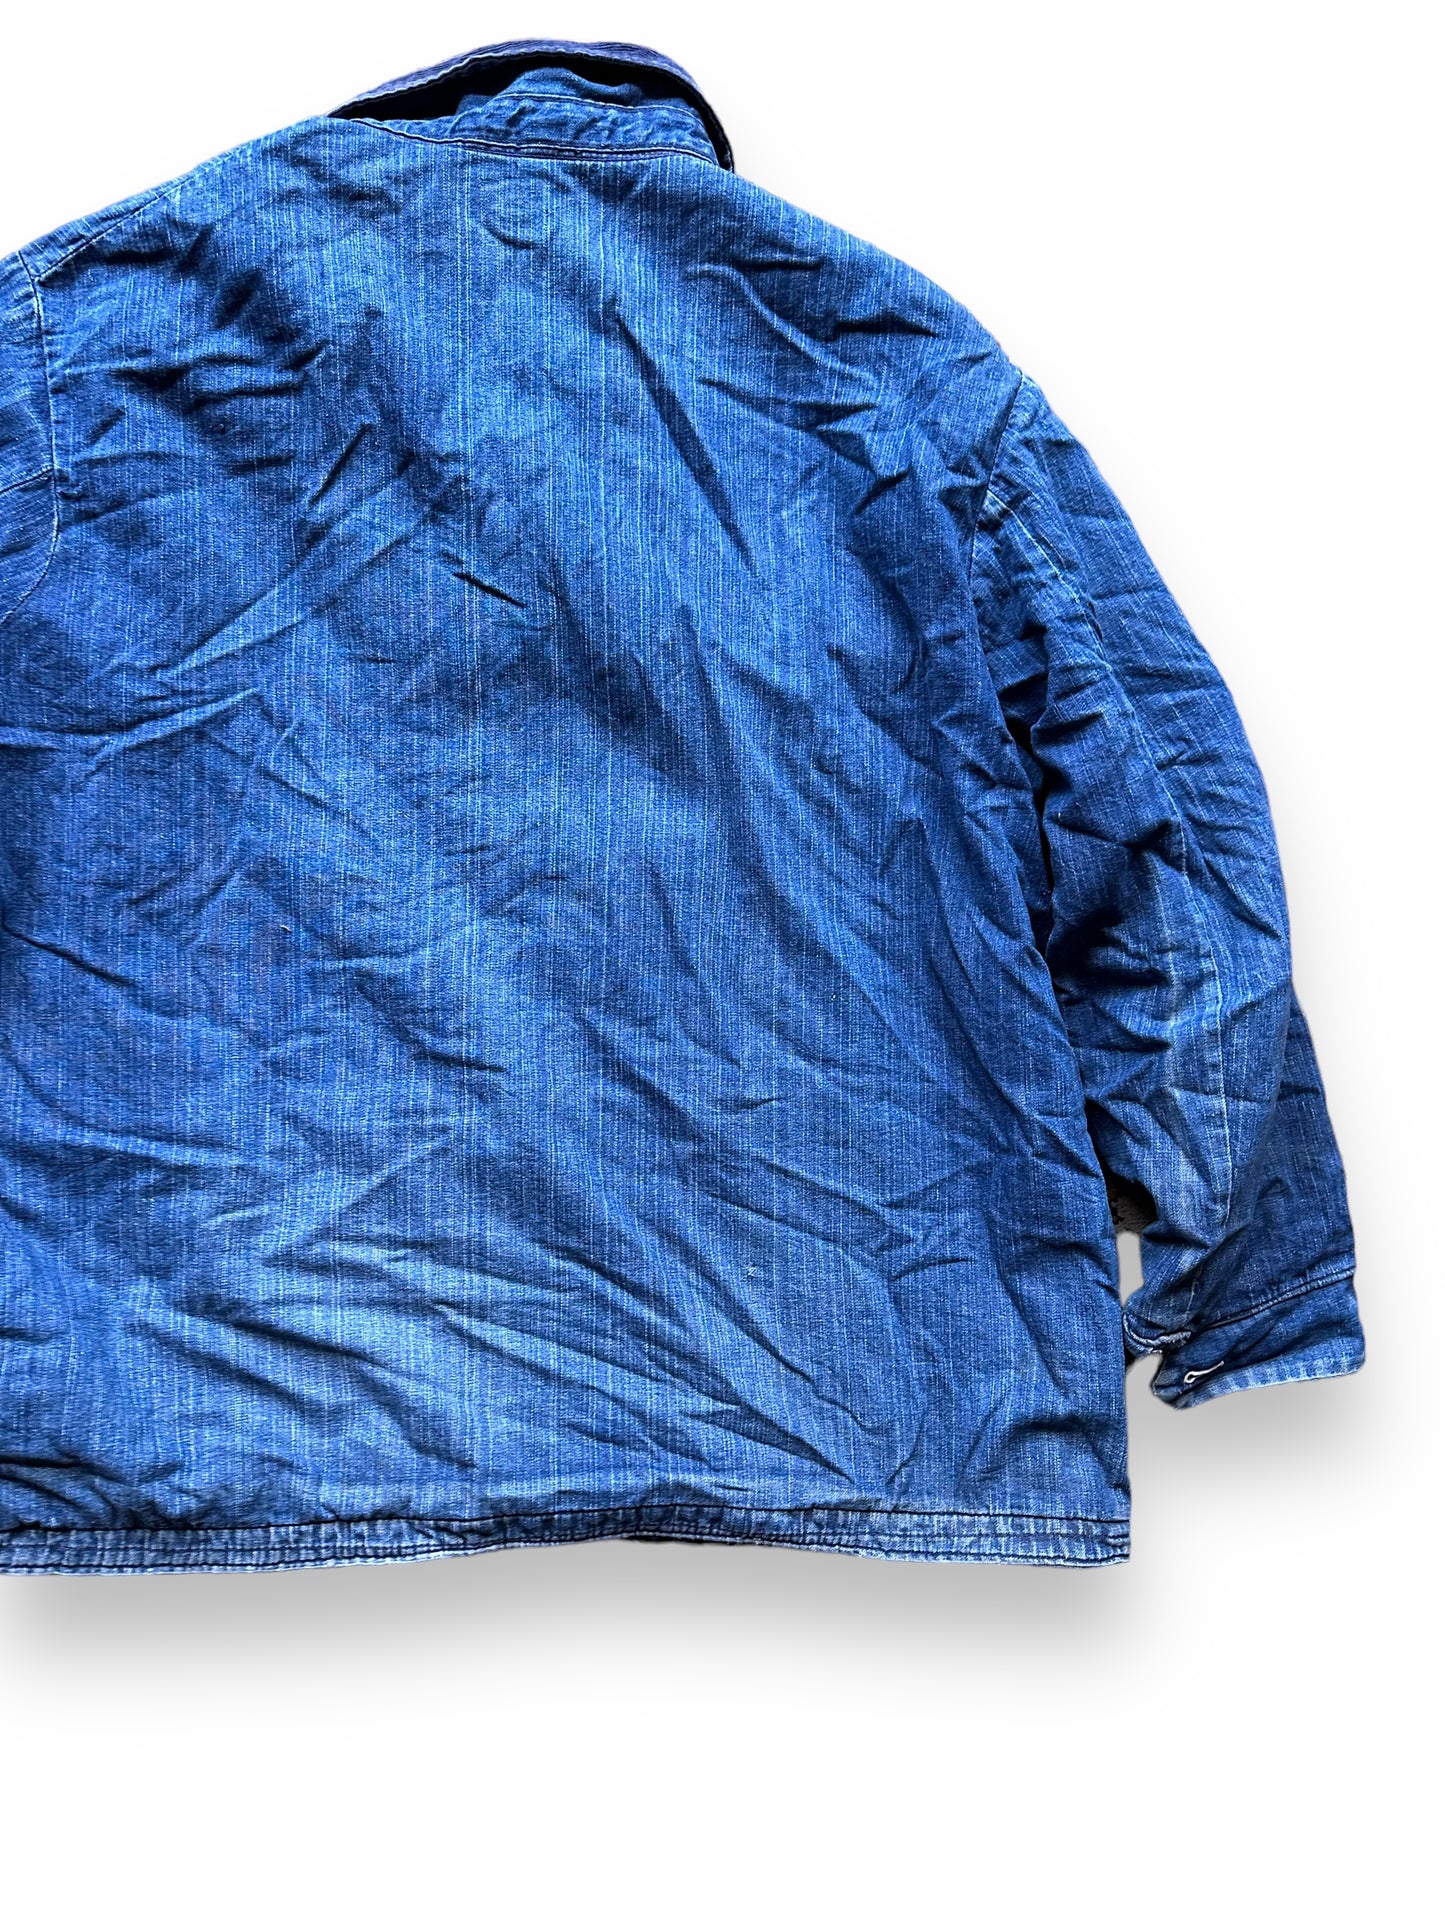 Right Rear View of Vintage Blanket Lined Wrangler Blue Bell Chore Coat SZ 50 | Vintage Denim Jacket Seattle | Seattle Vintage Clothing